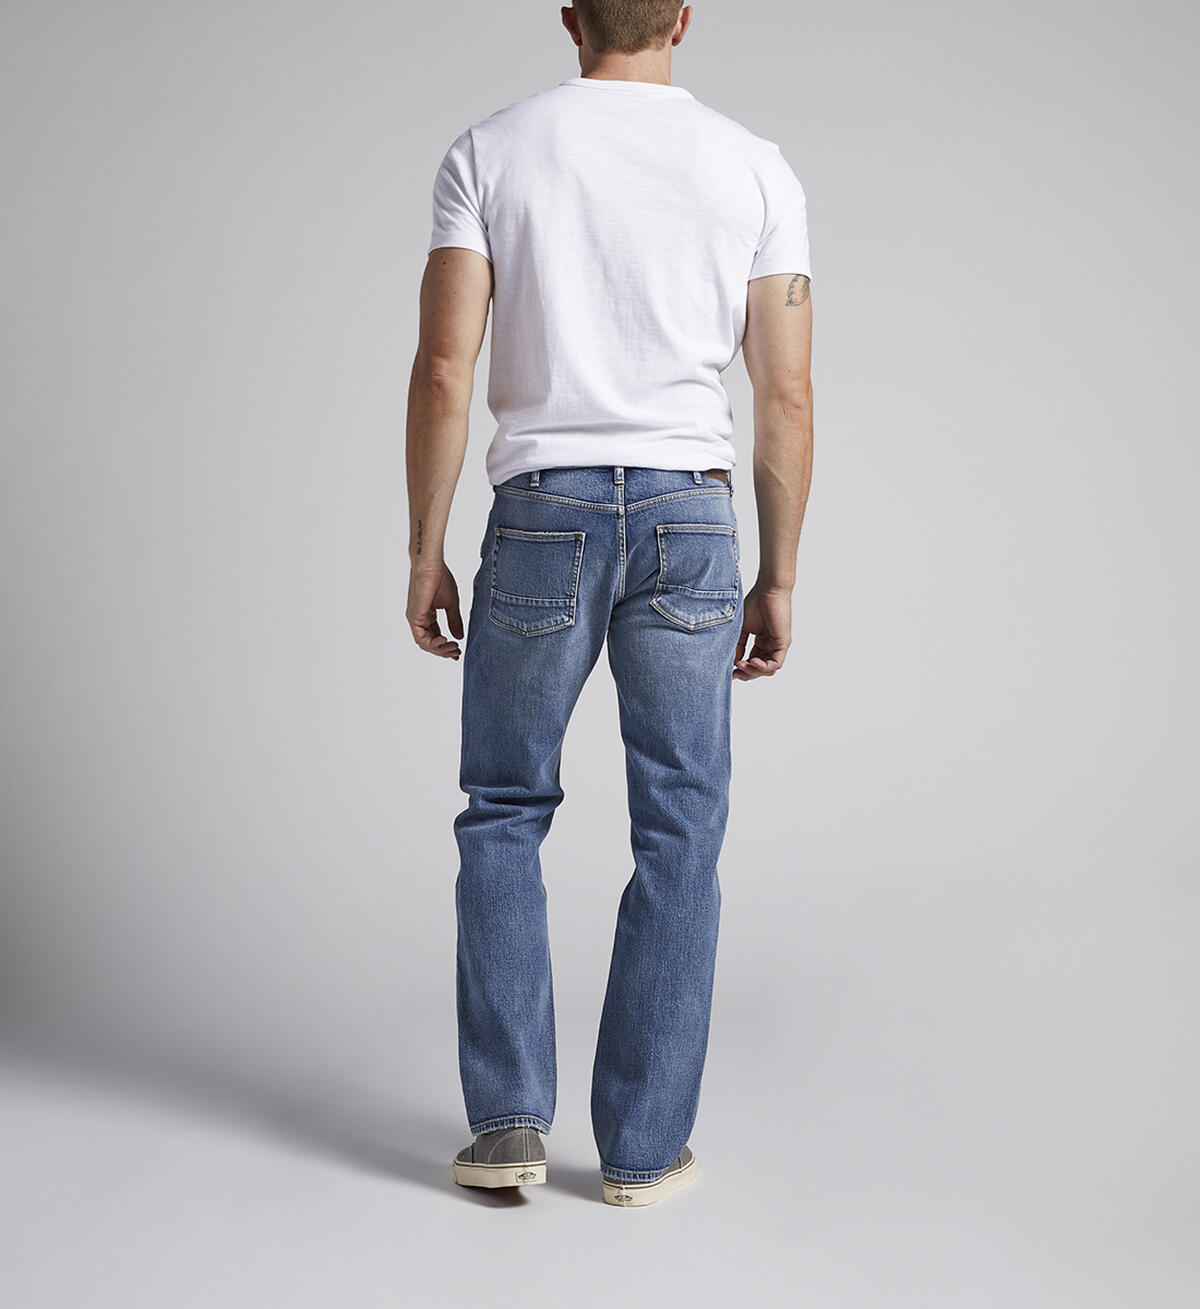 Polson Slim Fit Slim Straight Leg Jeans, Indigo, hi-res image number 1